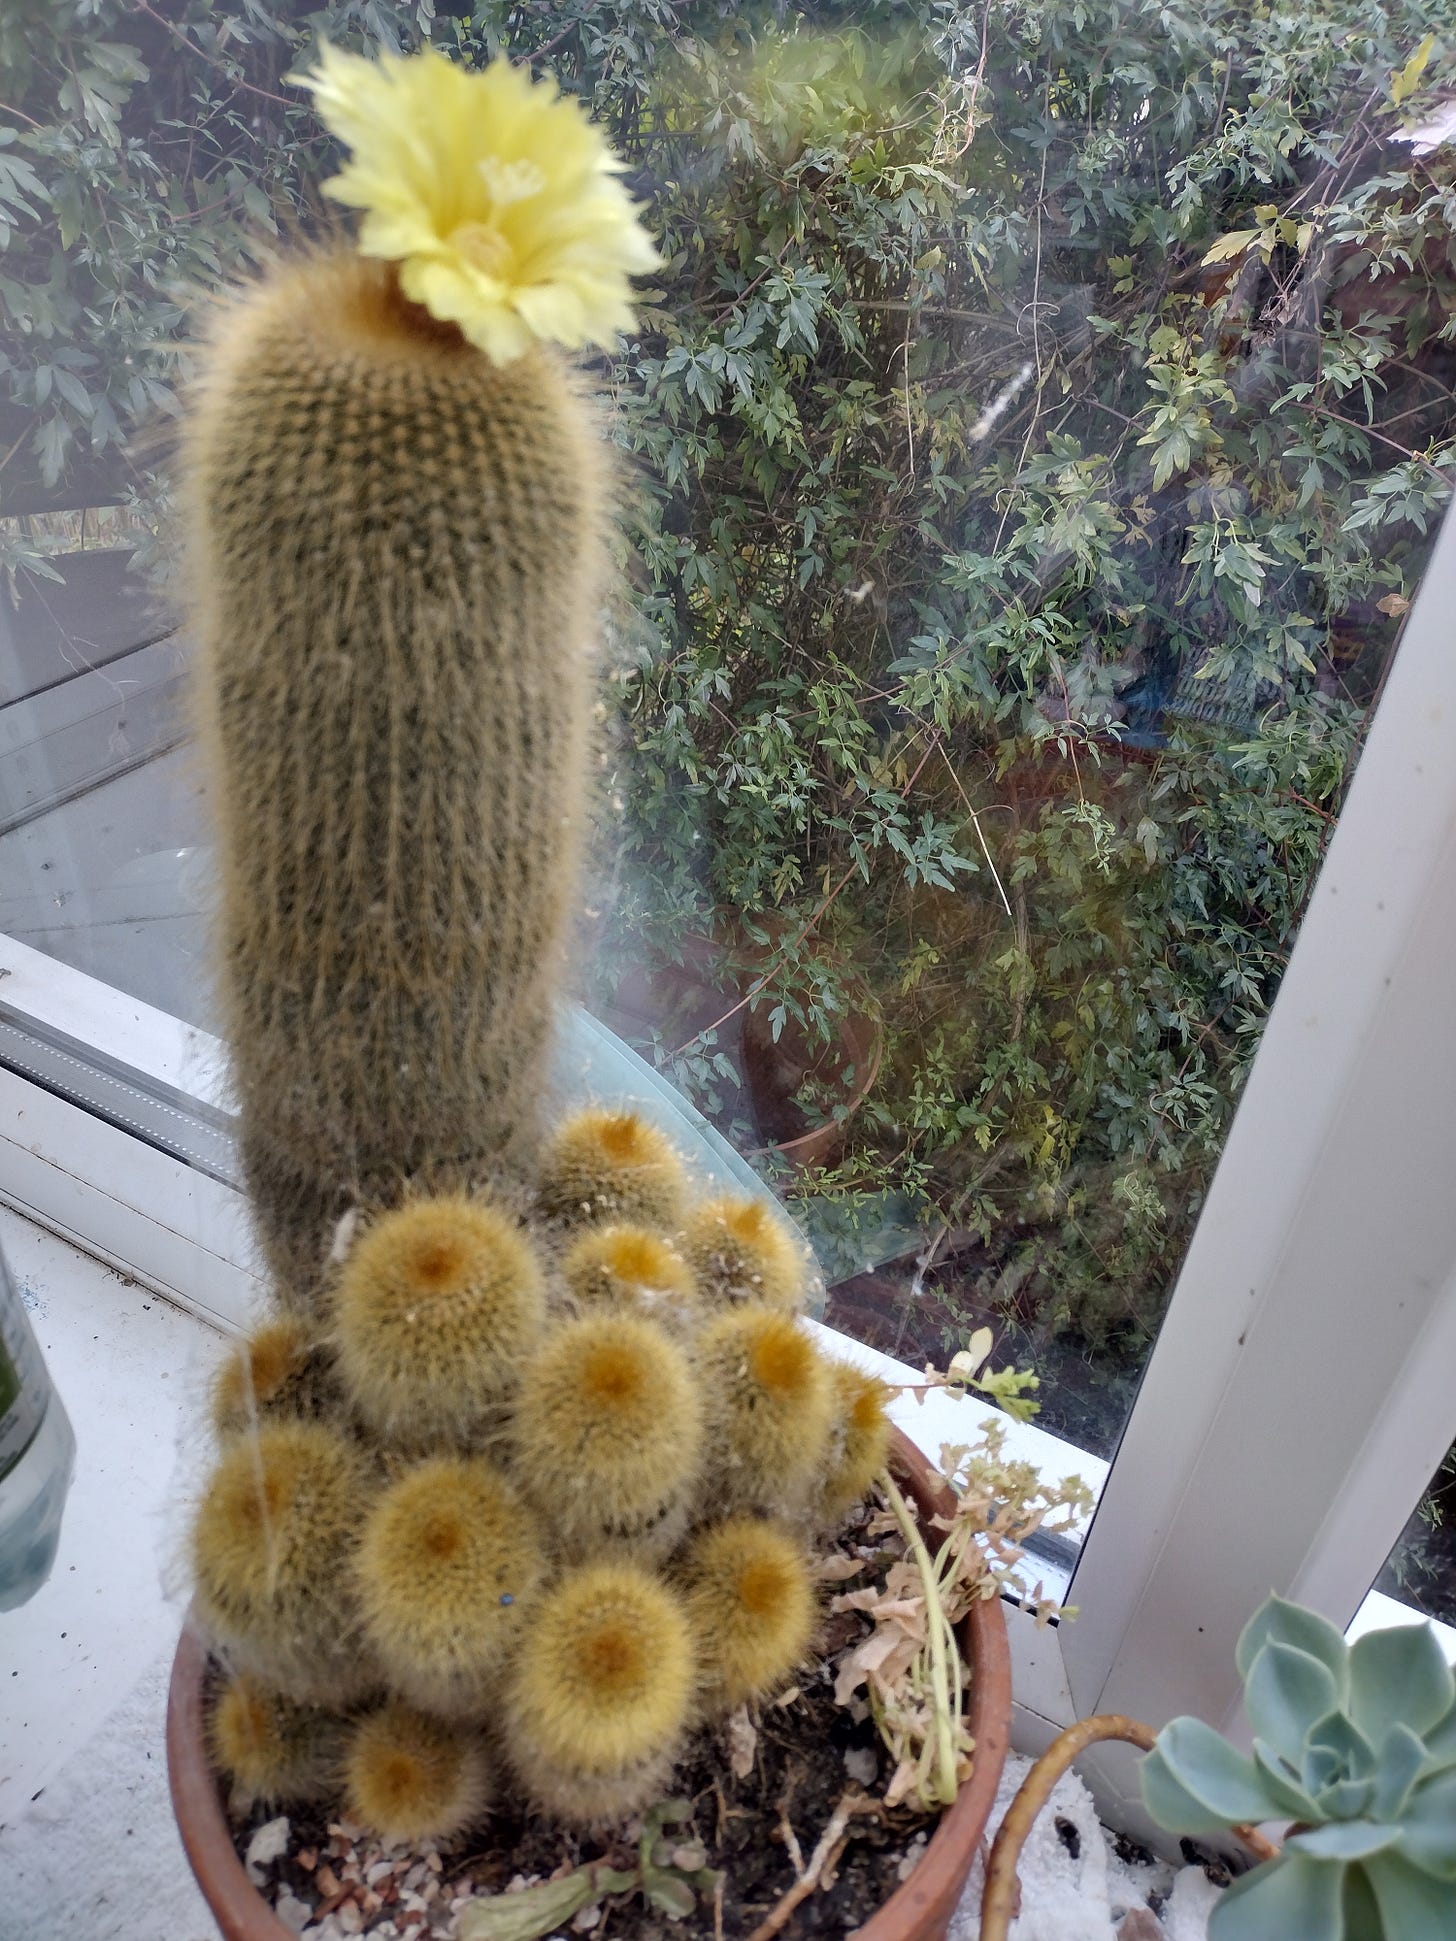 A cactus flowering, by Elaine Freedman